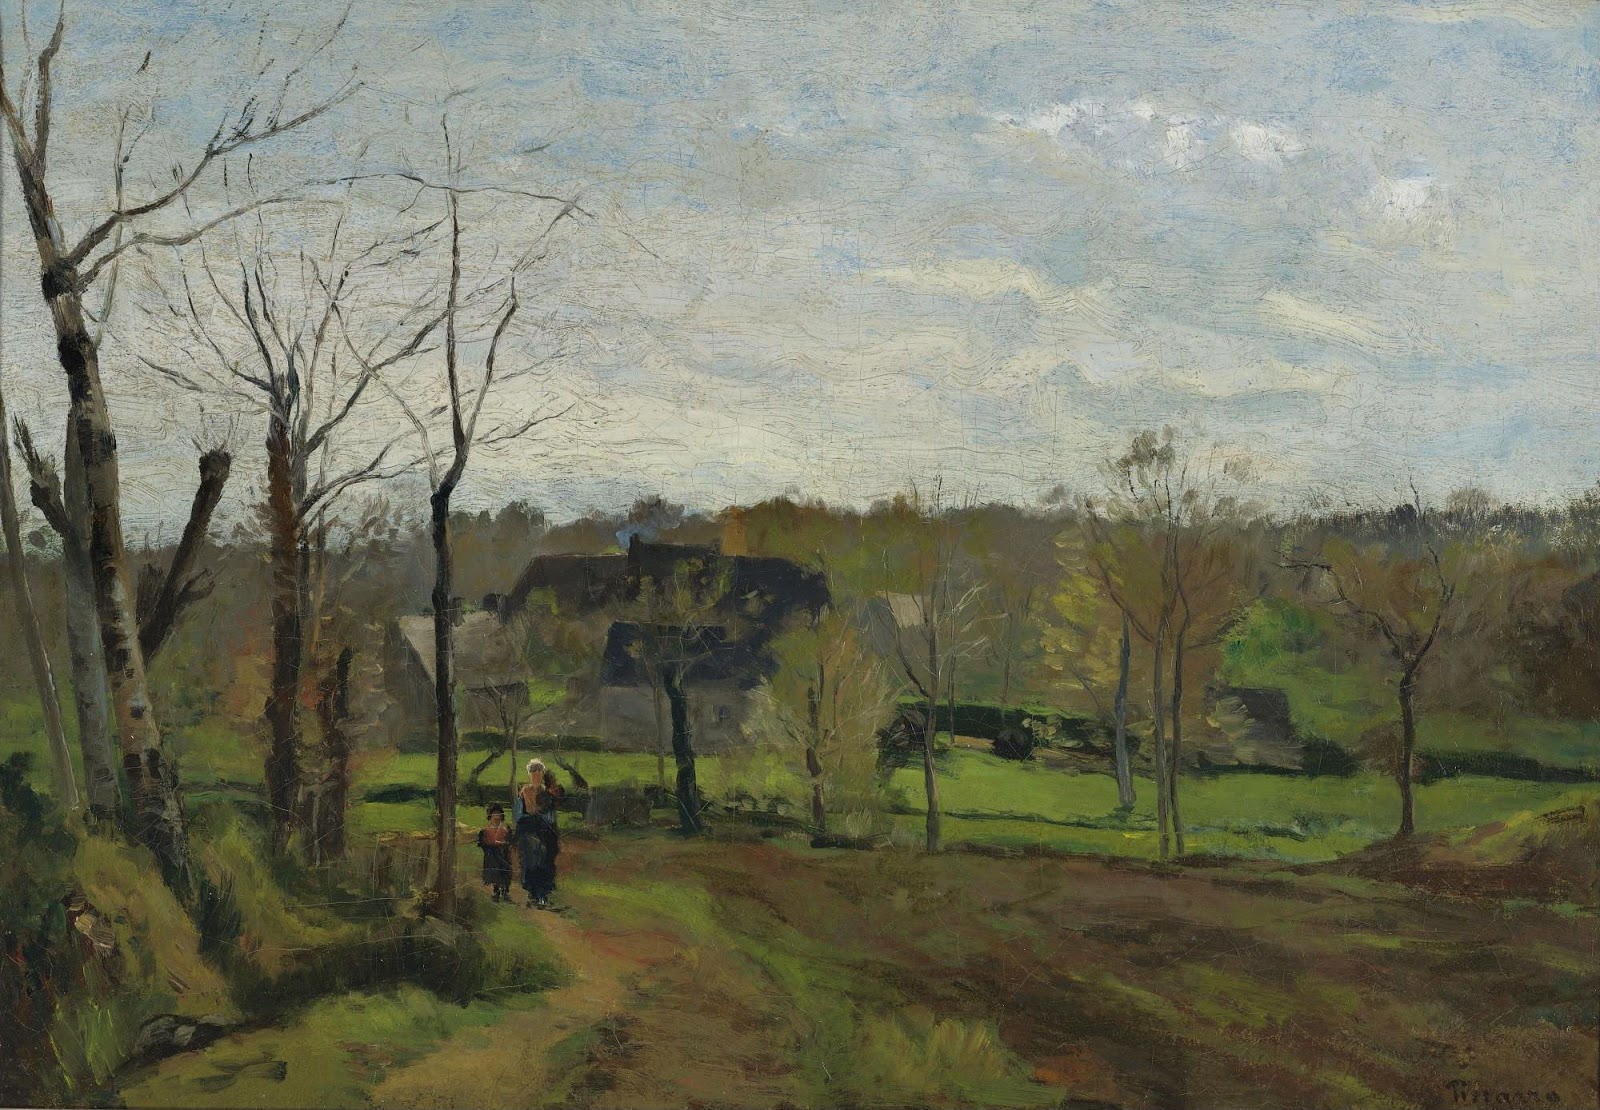 Camille+Pissarro-1830-1903 (443).jpg